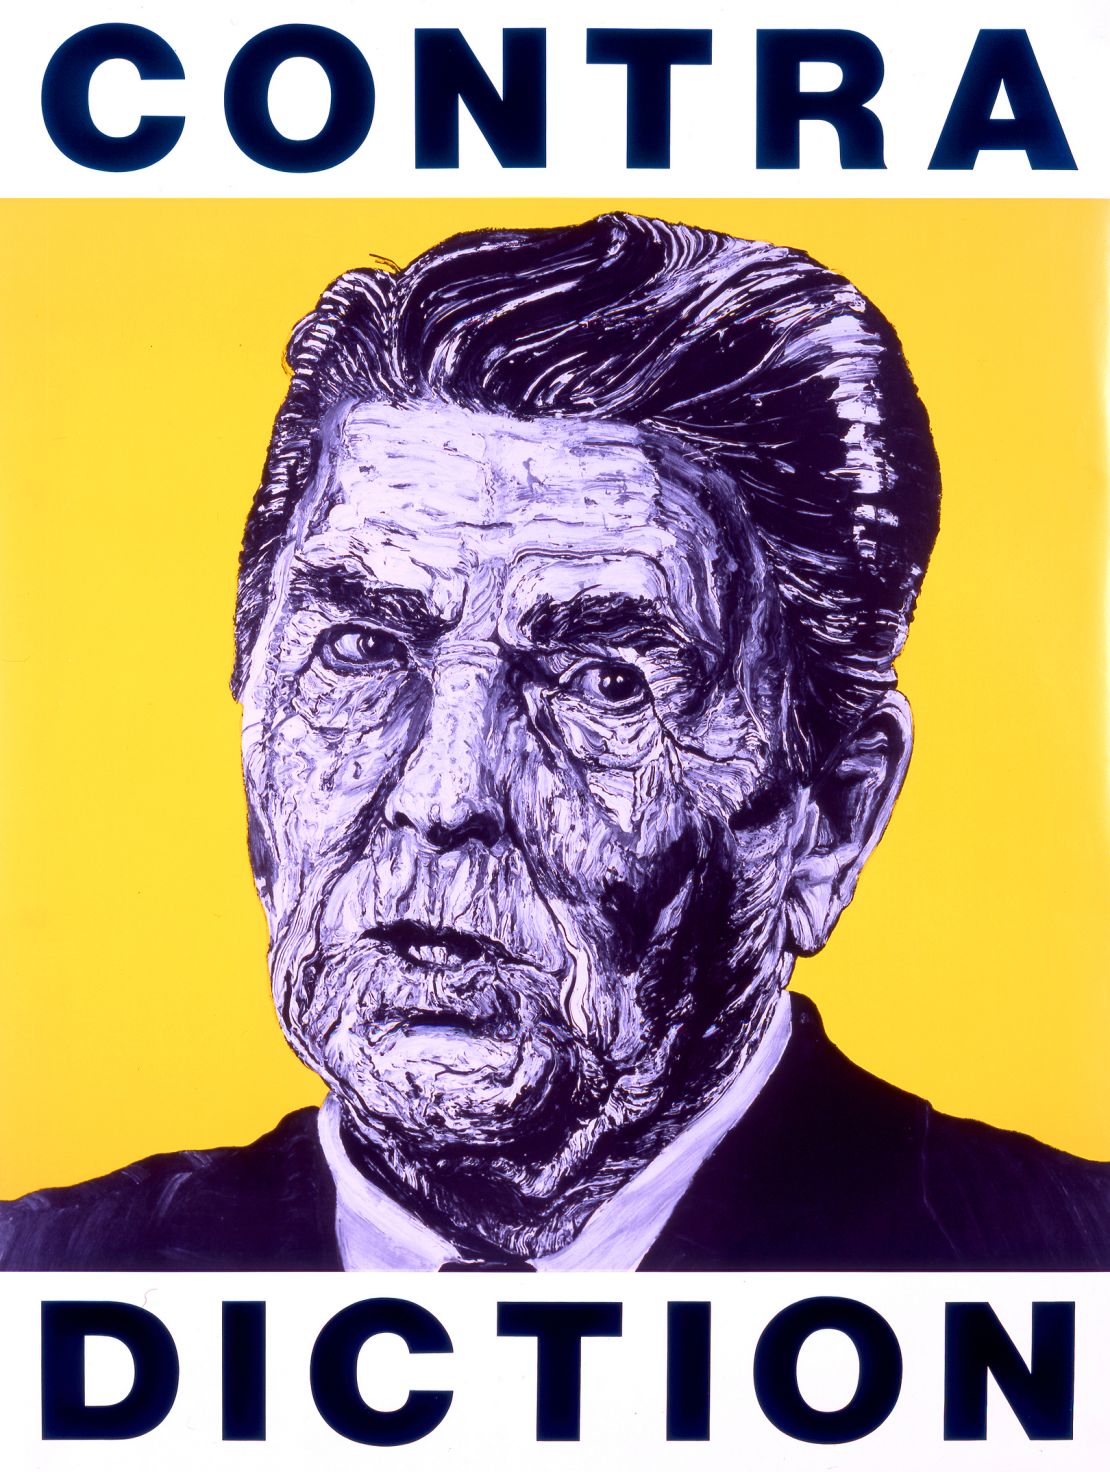 CONTRA DICTION (Ronald Reagan) by Robbie Conal